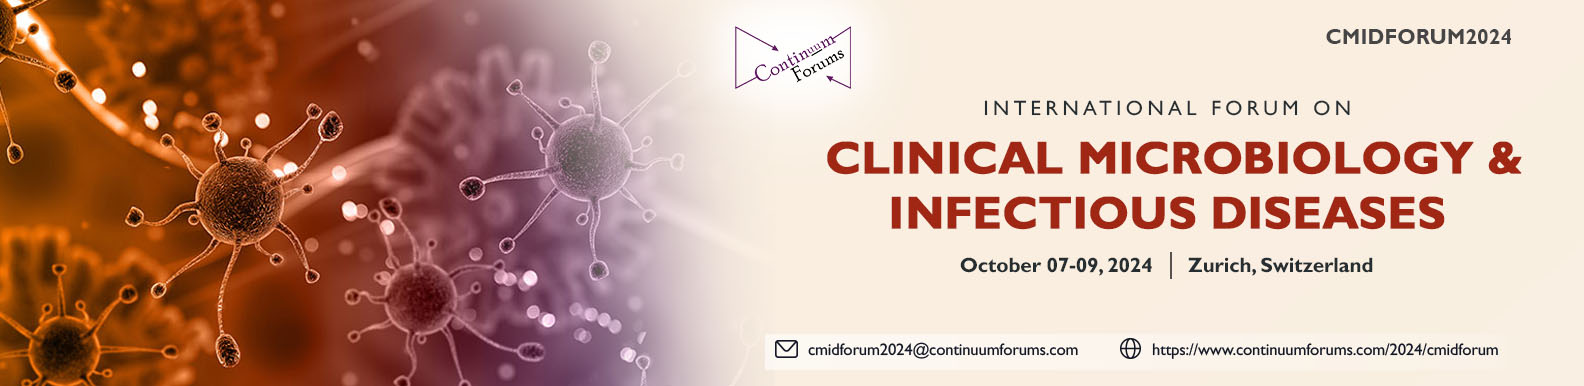 3rd International Forum on Clinical Microbiology and Infectious Diseases, Zurich, Switzerland,Zürich,Switzerland